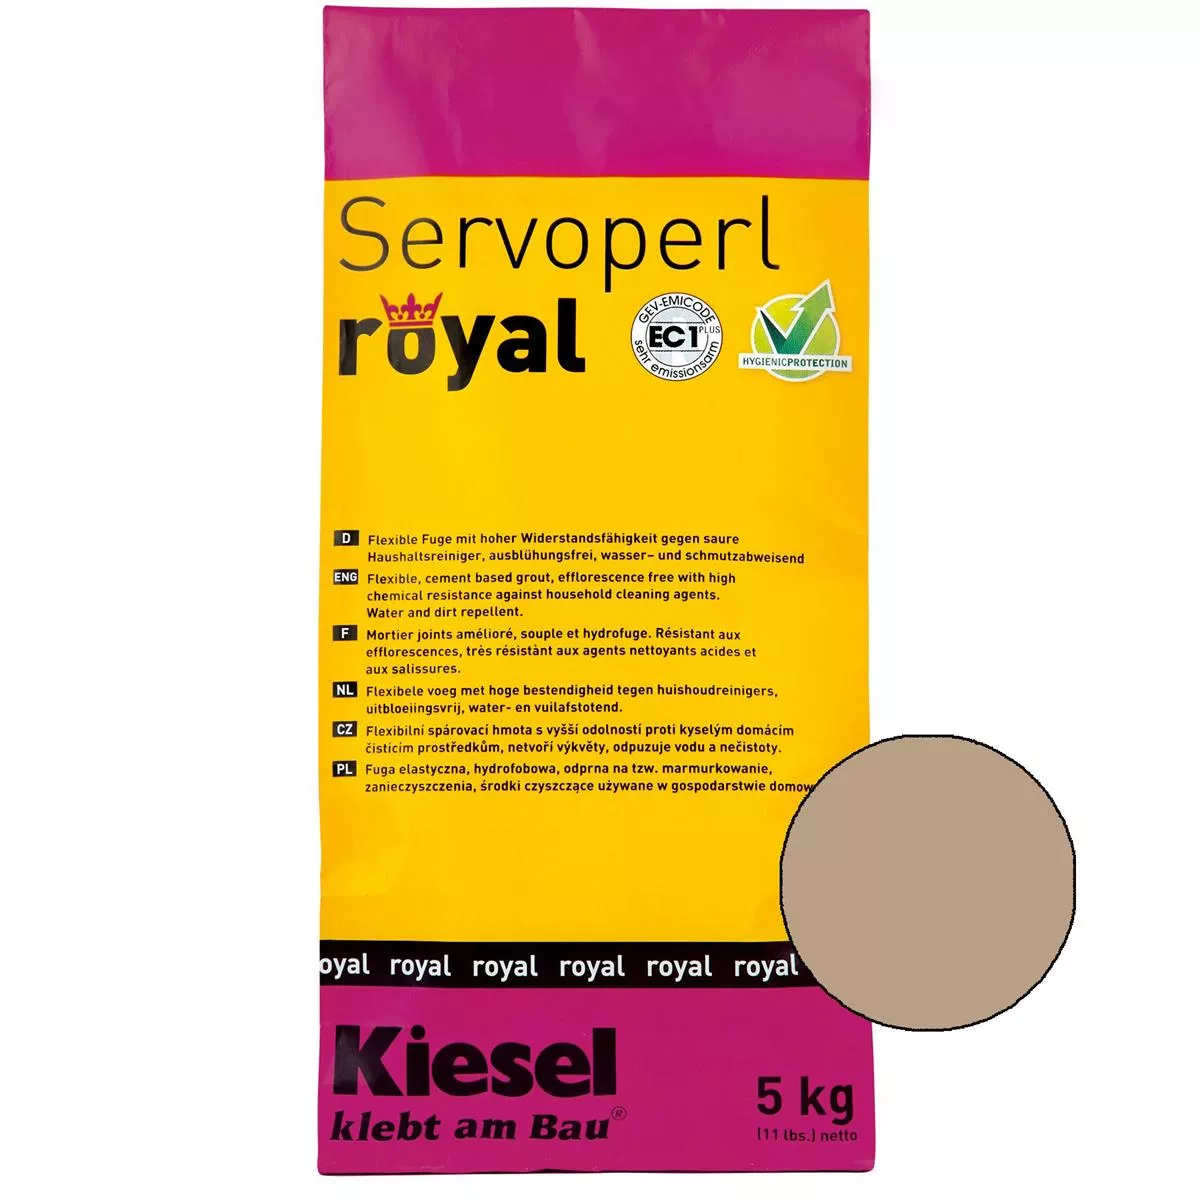 Kiesel Servoperl Royal - Giunto Flessibile, Idrorepellente E Repellente Allo Sporco (5KG Desert Sand